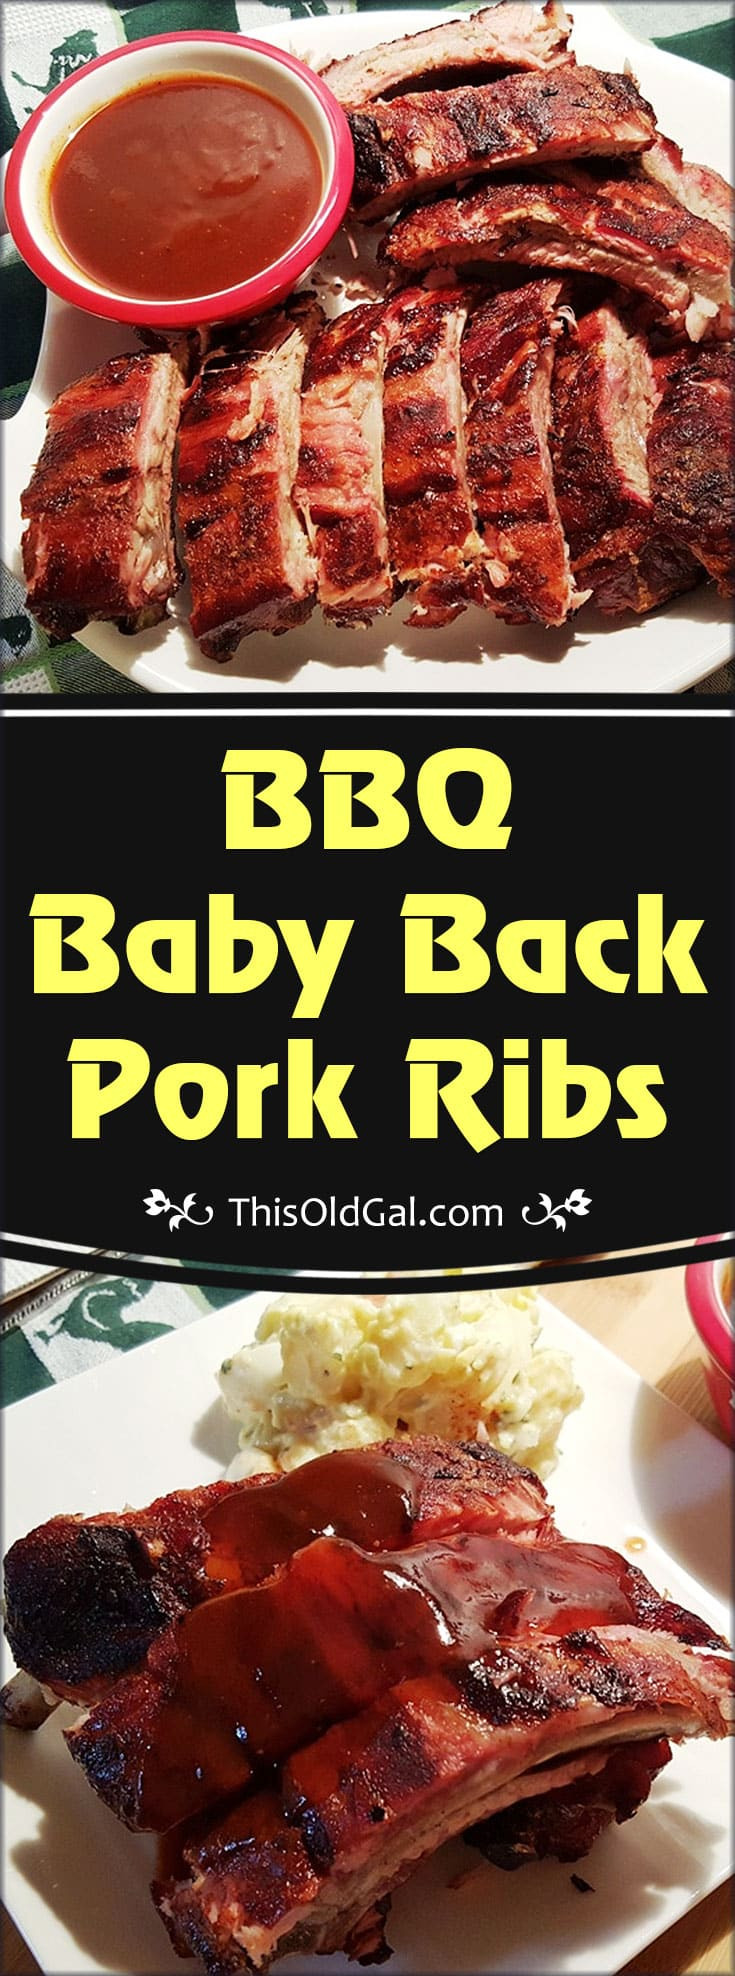 Baby Pork Ribs
 My Favorite BBQ Baby Back Pork Ribs Recipe